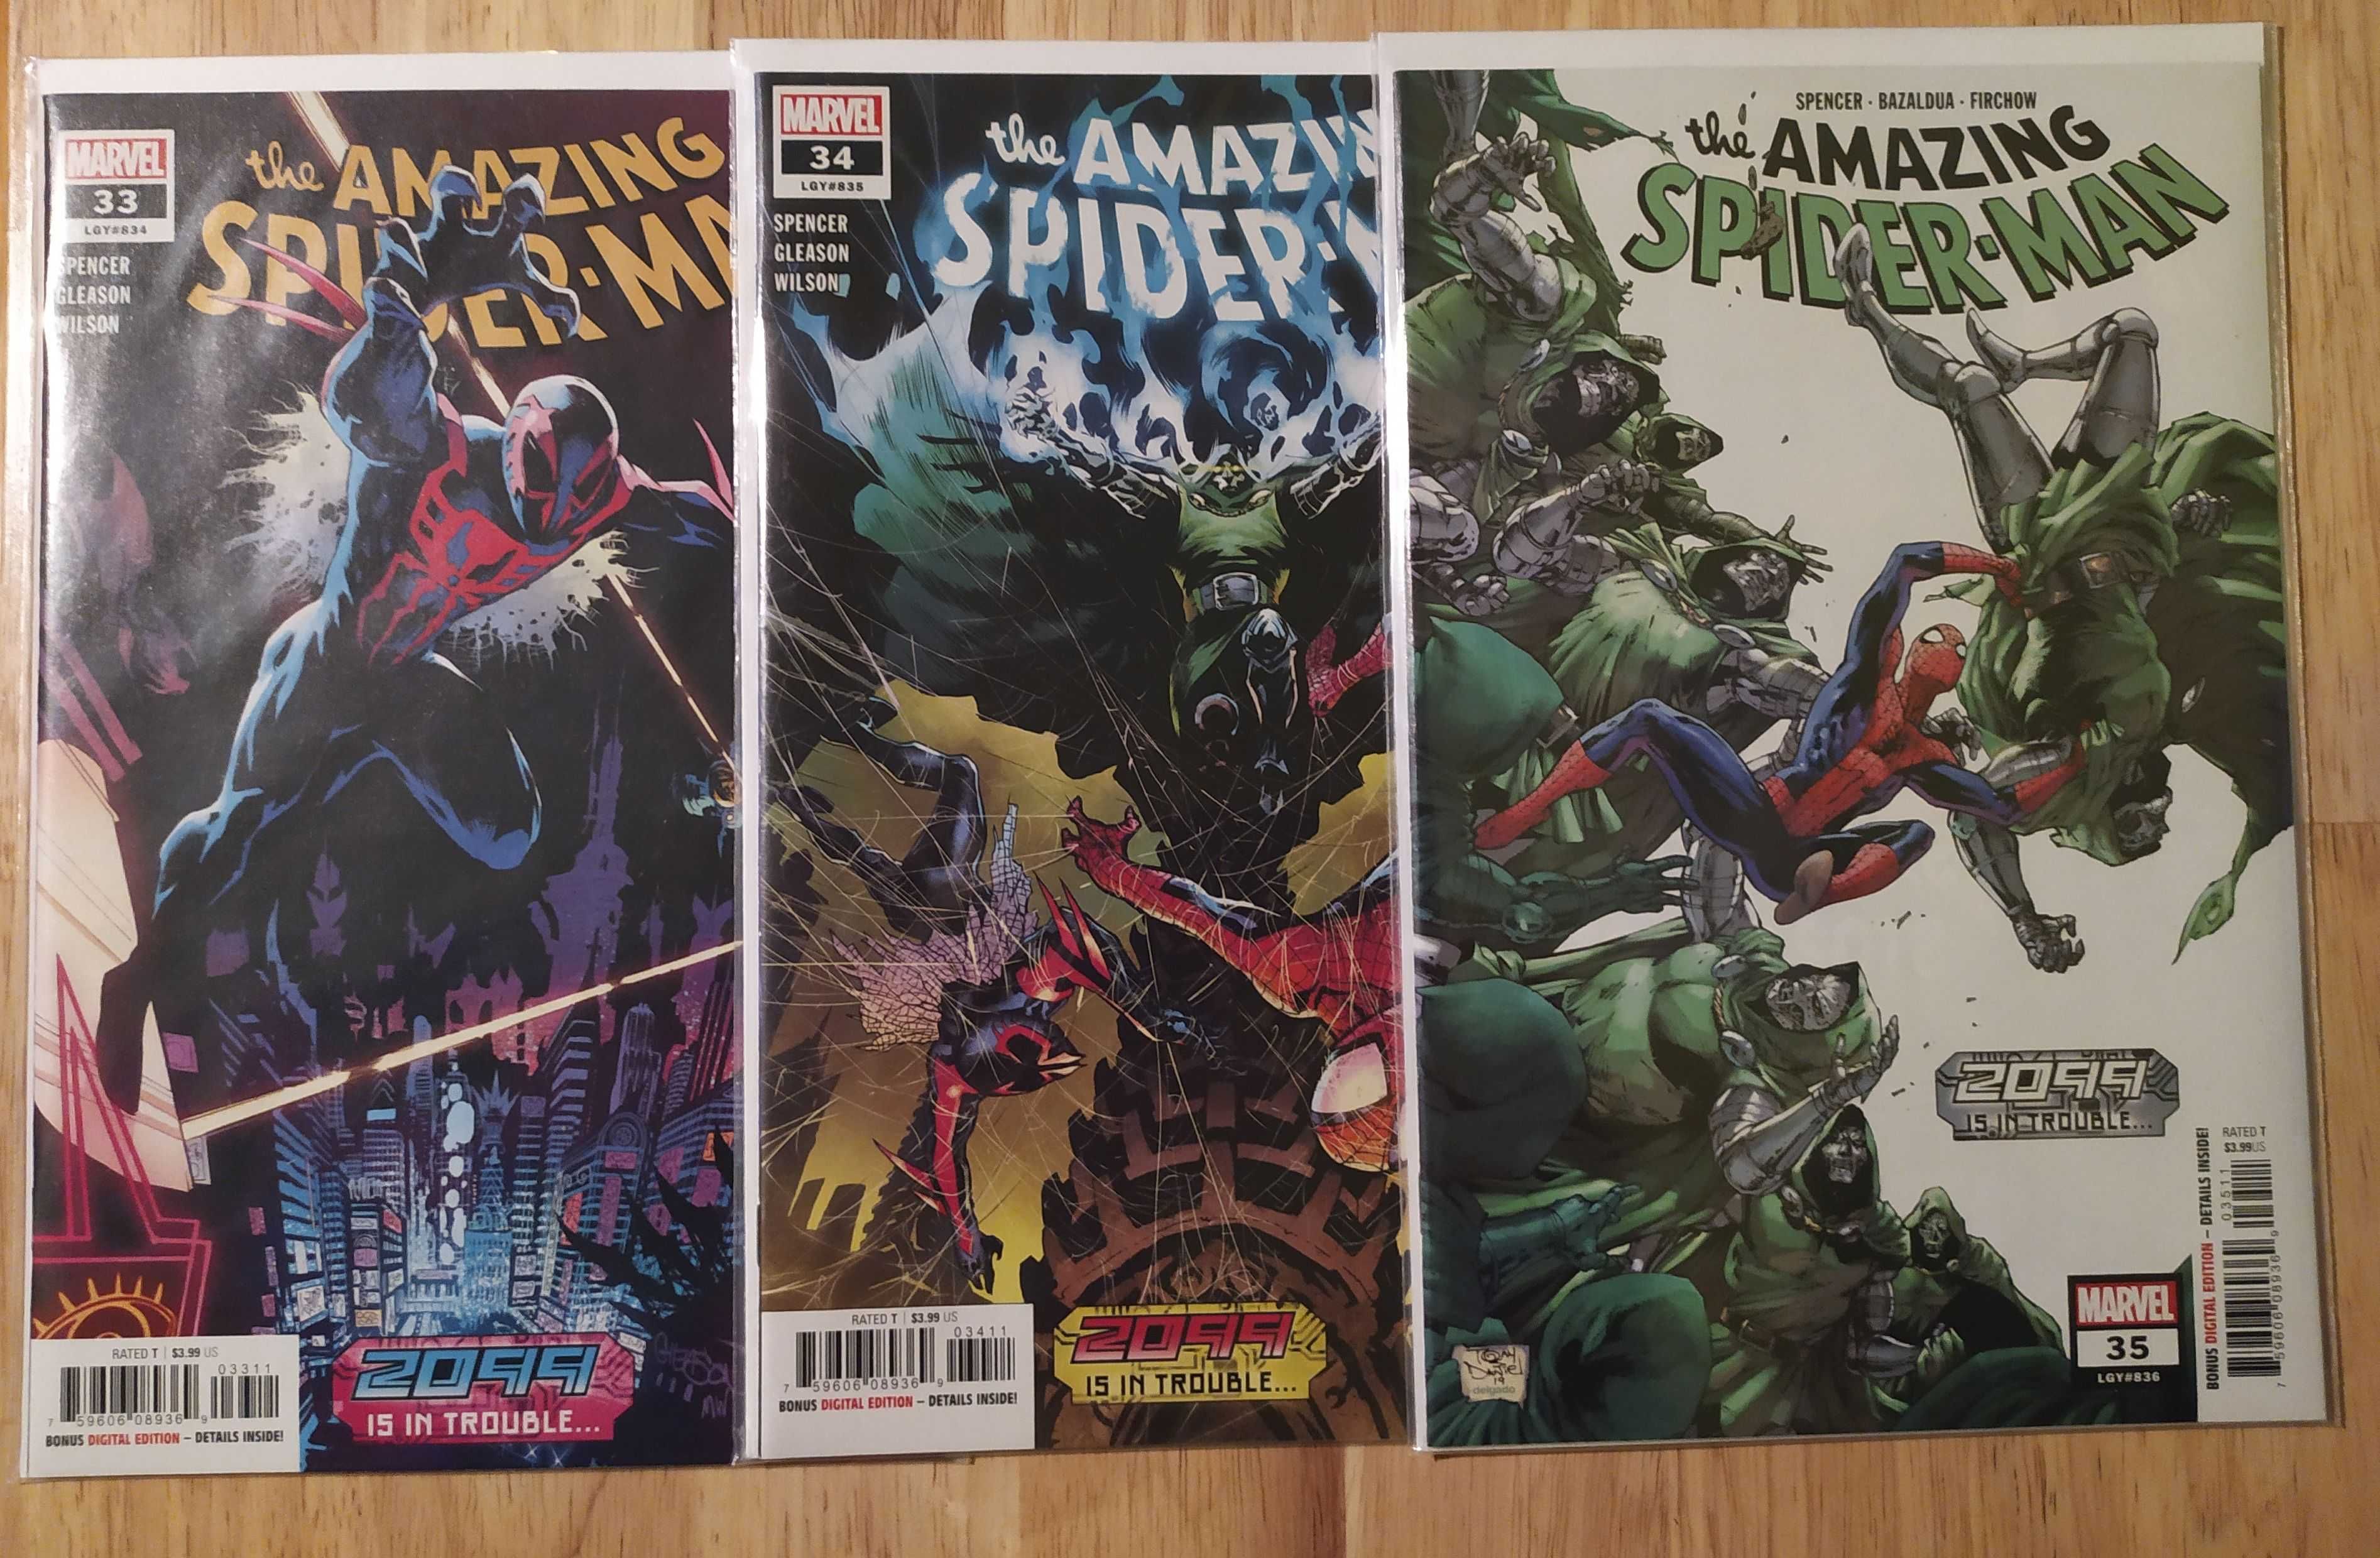 Amazing Spider-Man #33, #34, #35 [Marvel Comics]